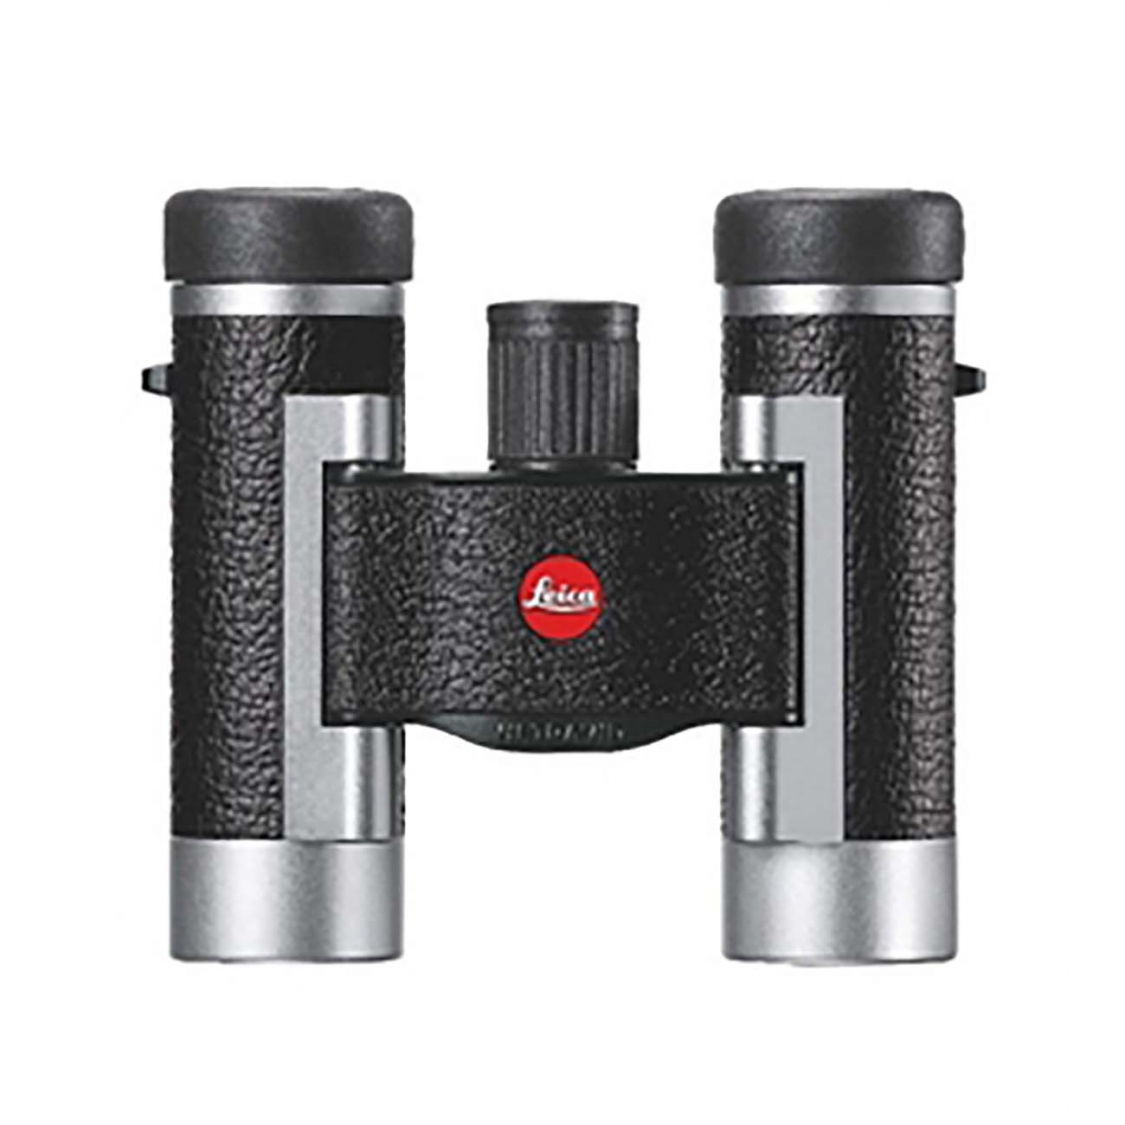 Leica Silverline 8x20 Binoculars